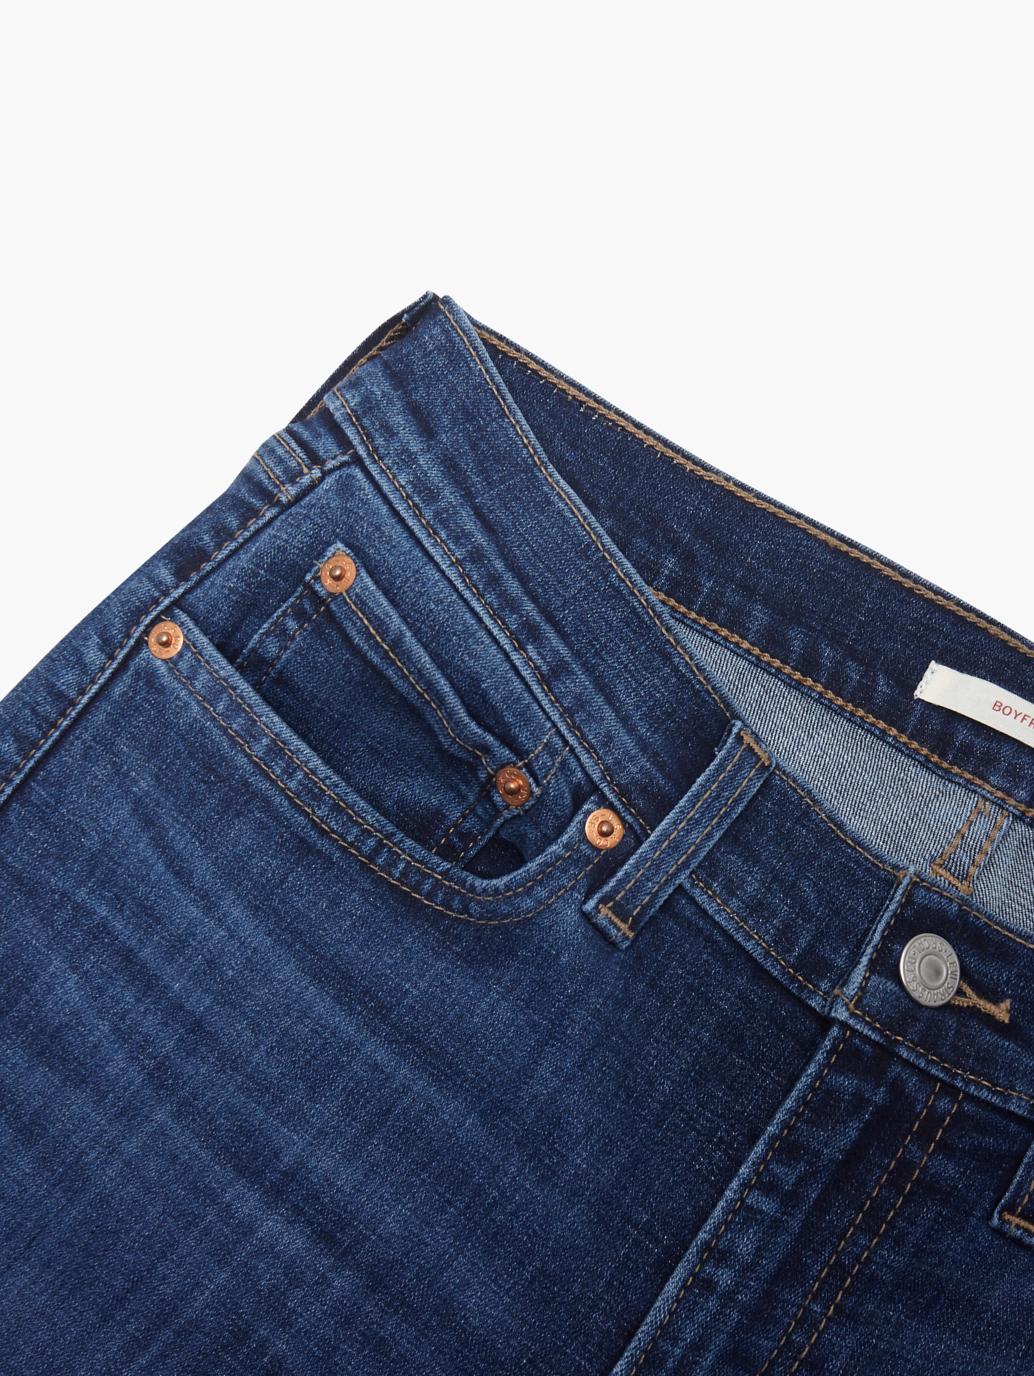 Buy Levi's® Women's New Boyfriend Jeans | Levi’s® Official Online Store MY